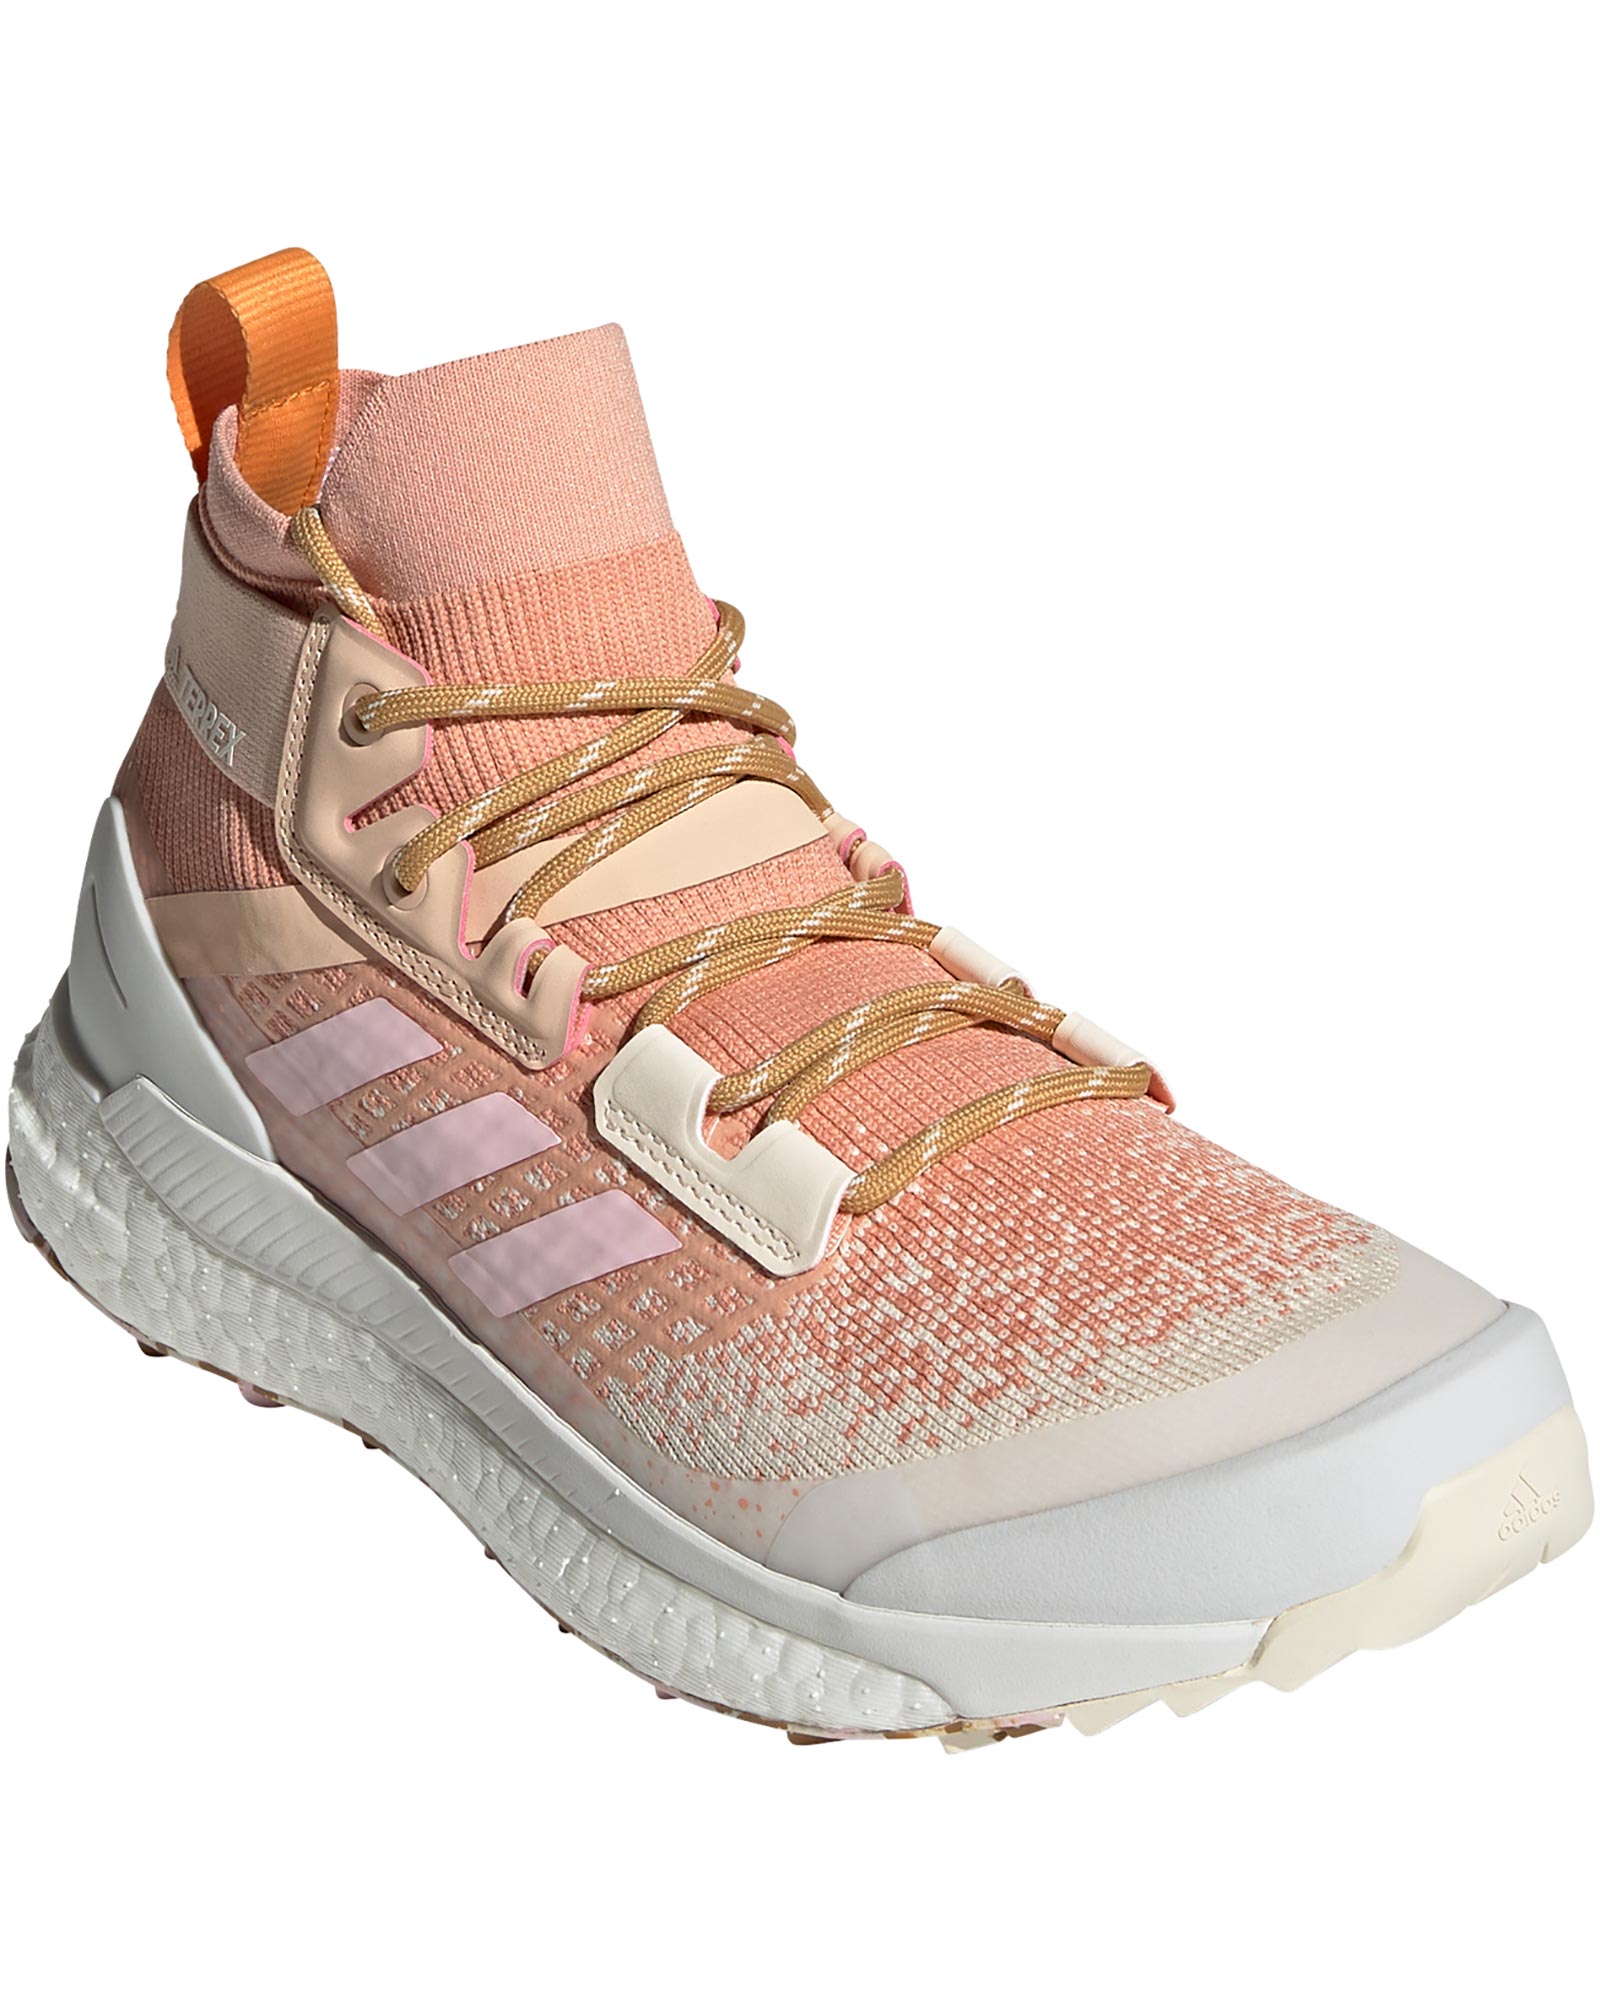 adidas TERREX Free Hiker Primeblue Women’s Boots - Ambient Blush/Clear Pink/Wonder White UK 5